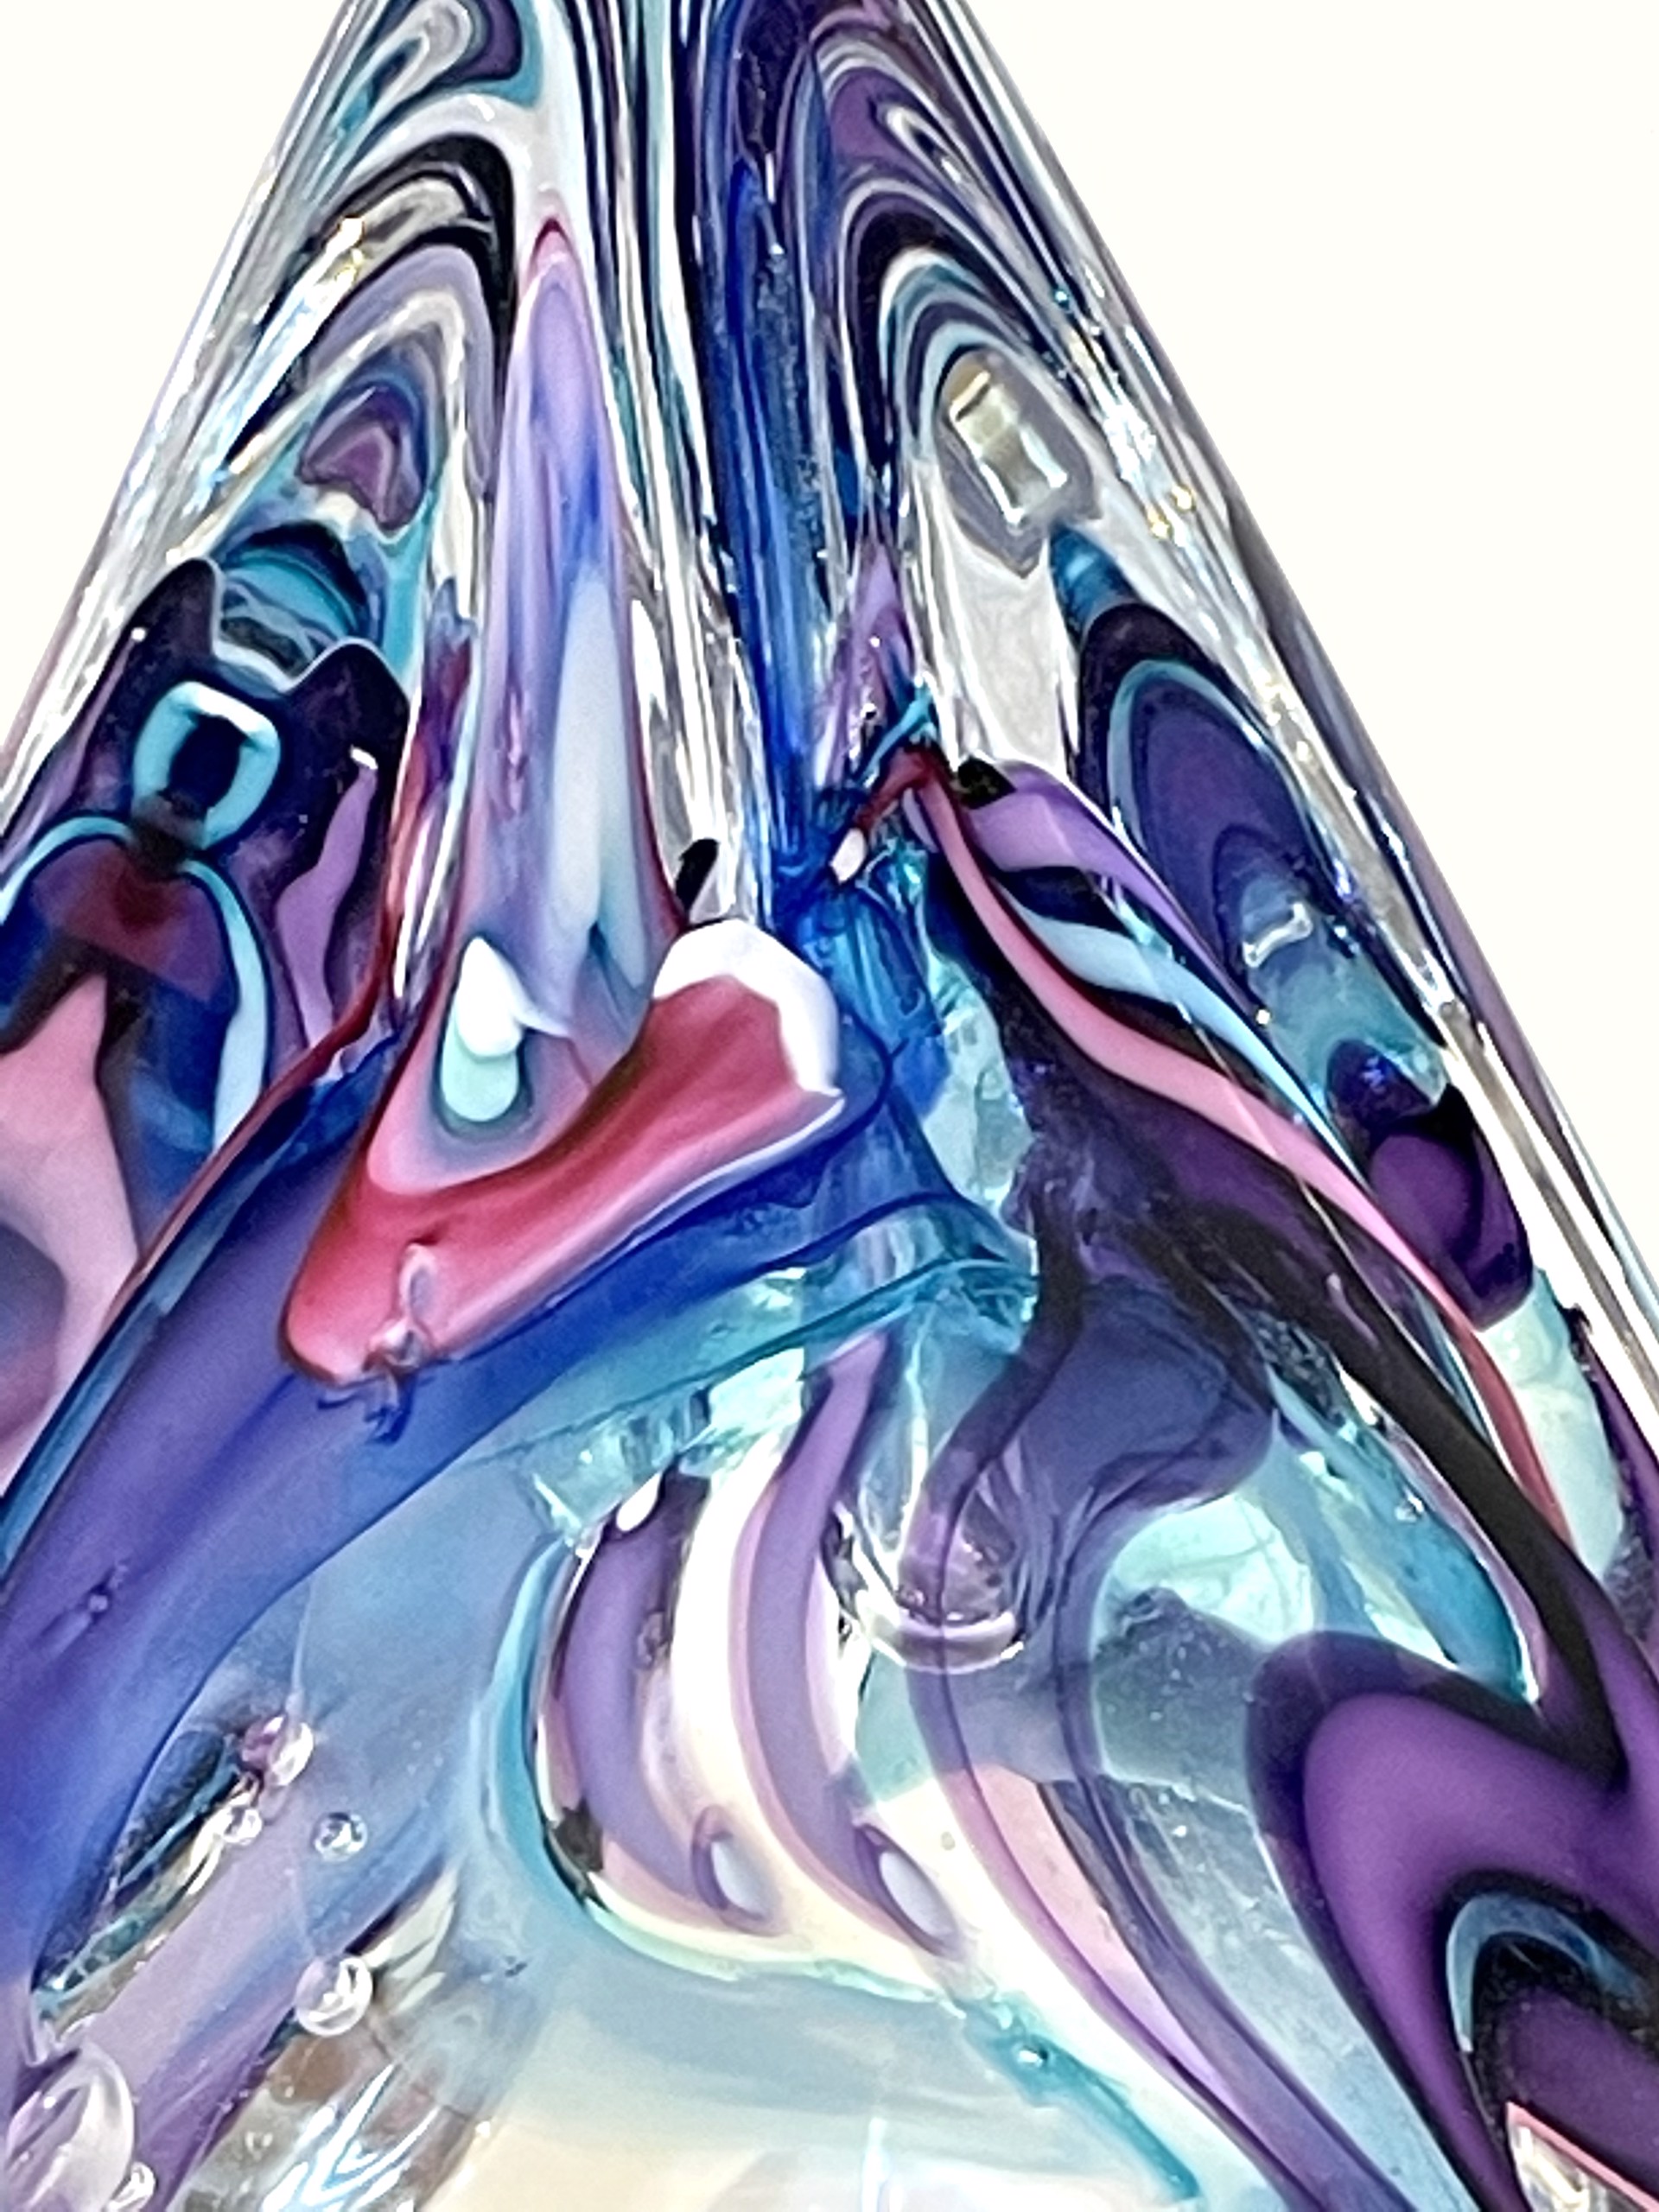 Hand Blown Glass Triangle - Blue, Pink & Purple by Schmidt Rhea Glass